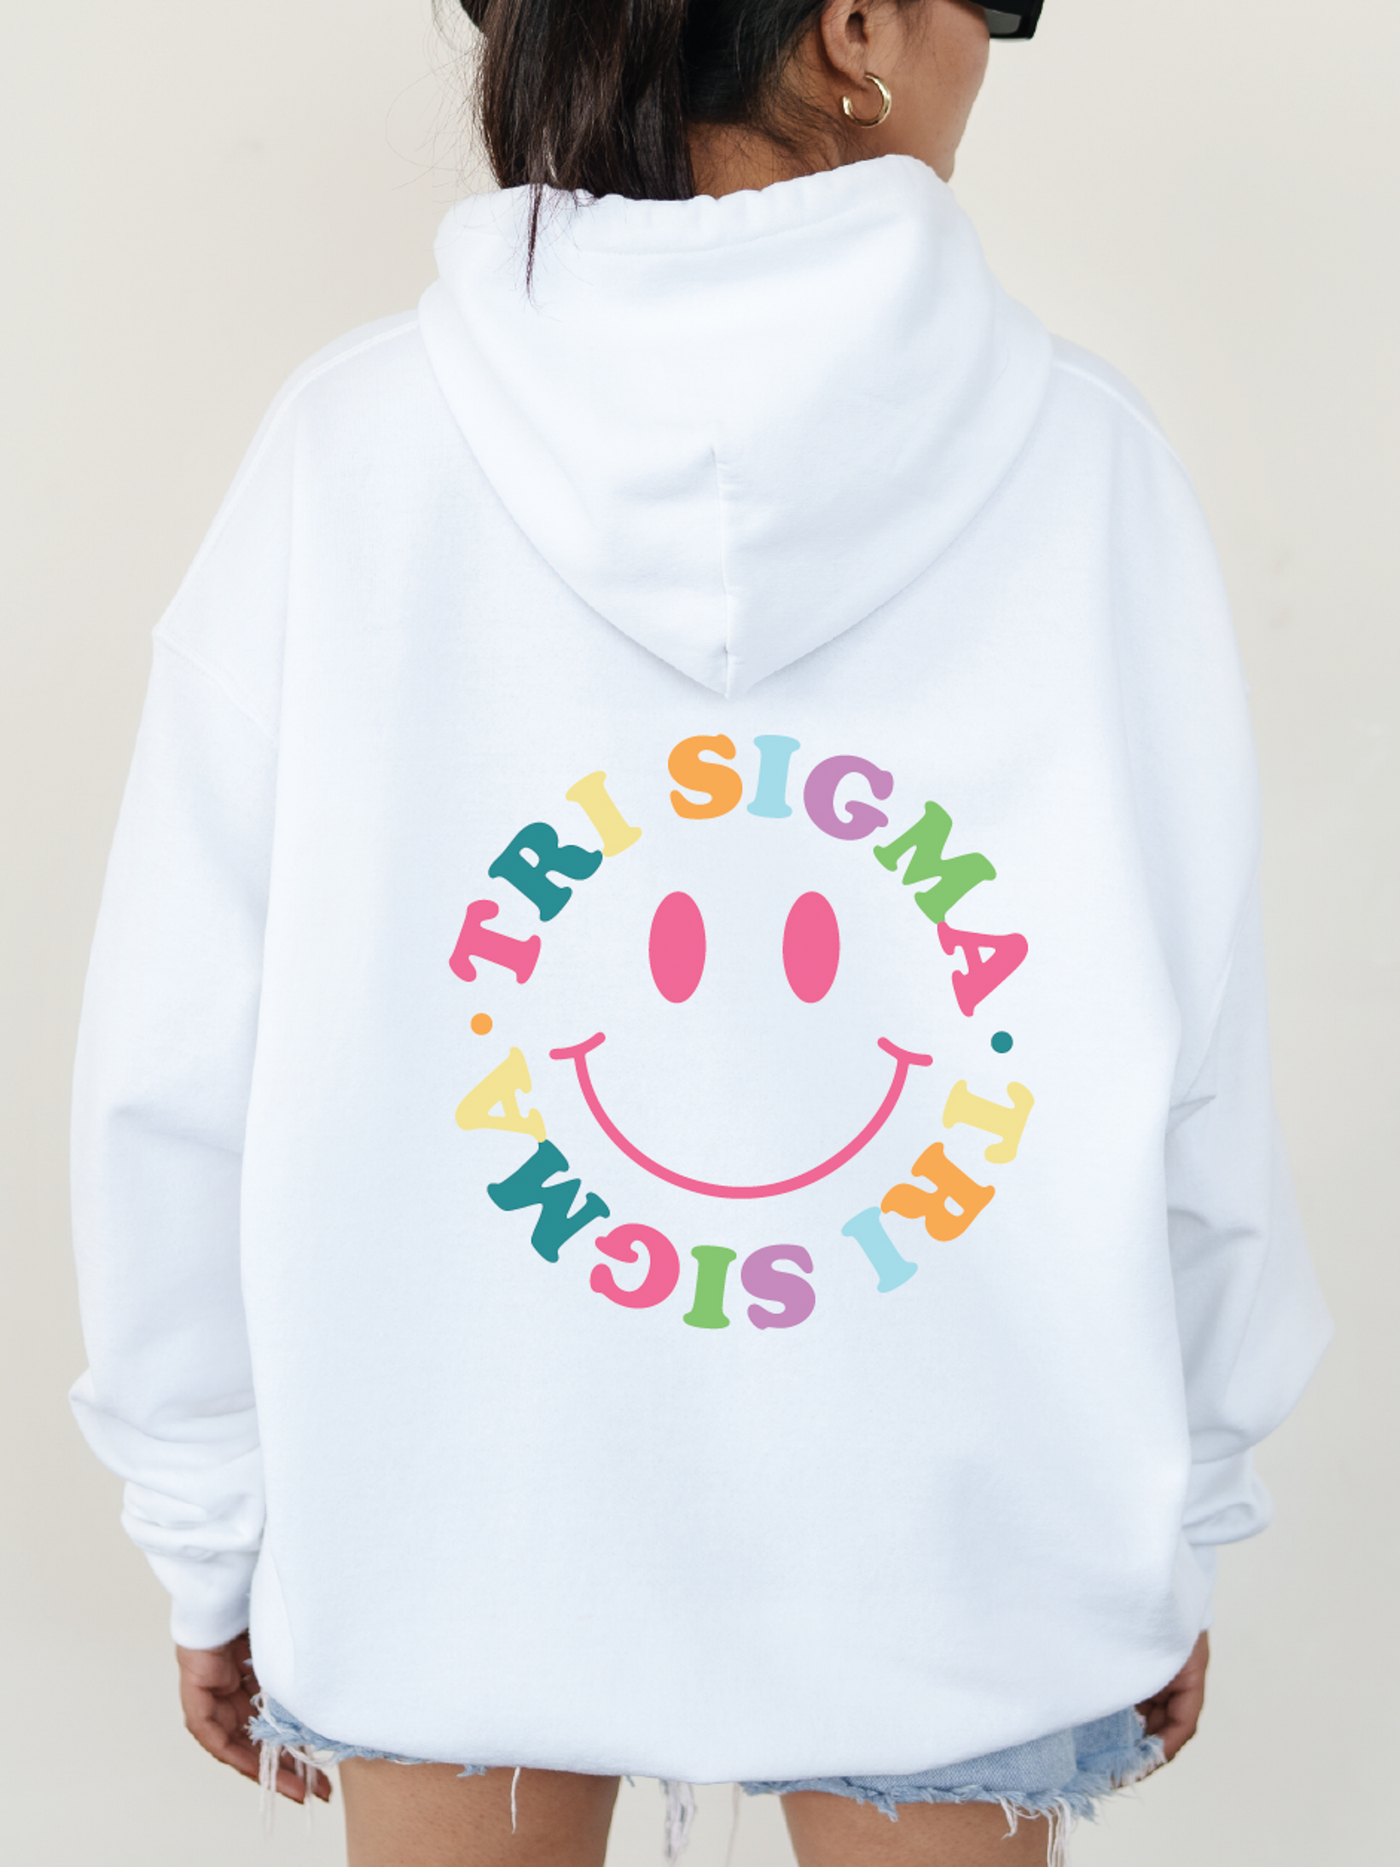 Sigma Sigma Sigma Colorful Smiley Sweatshirt Tri Sigma Sorority Hoodie